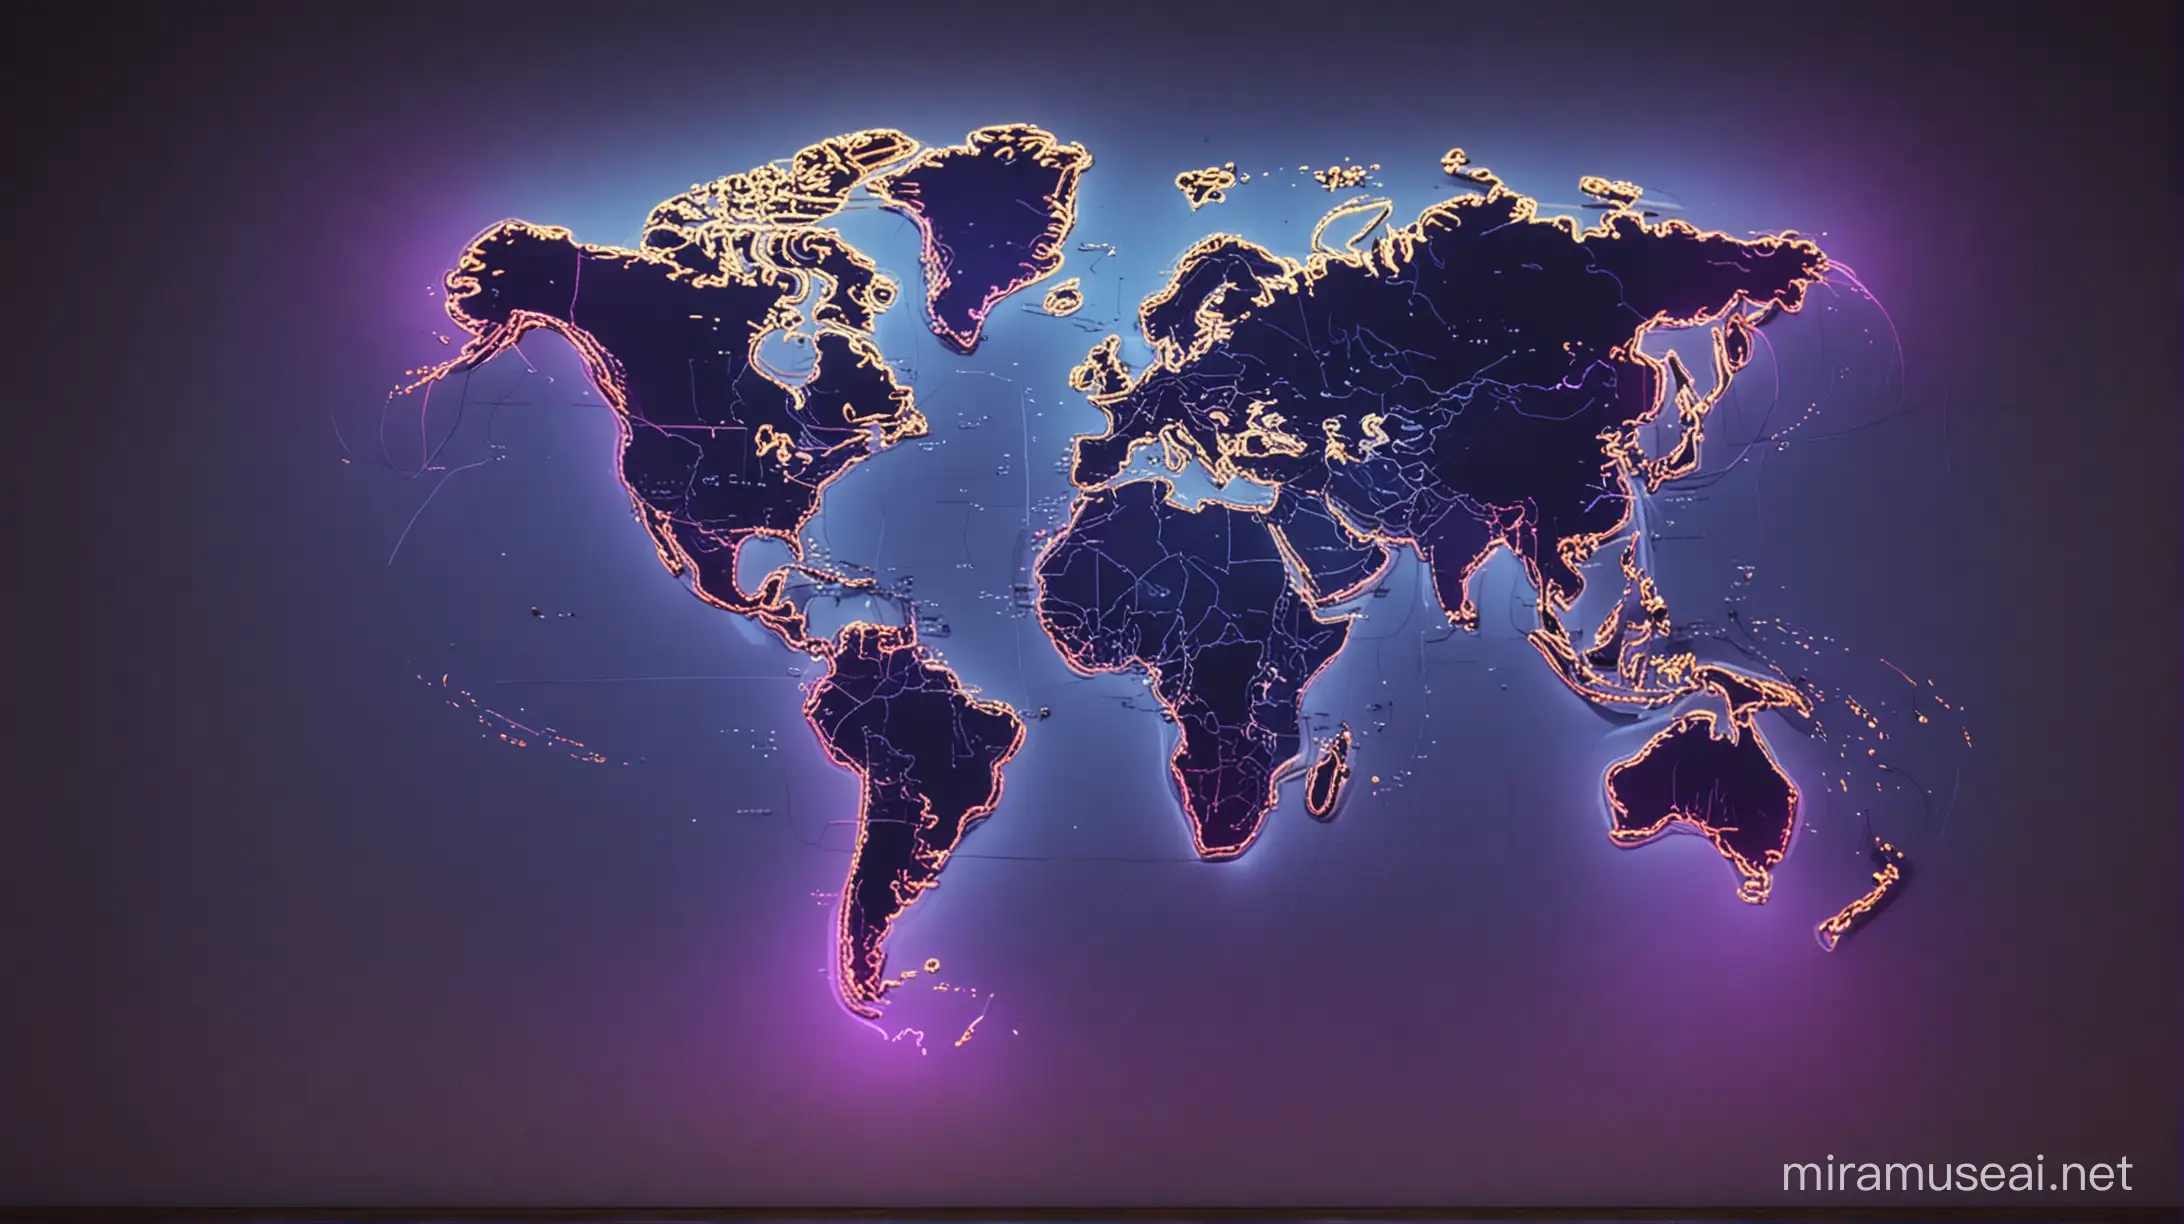 Illuminated Global Map in Futuristic Neon Style